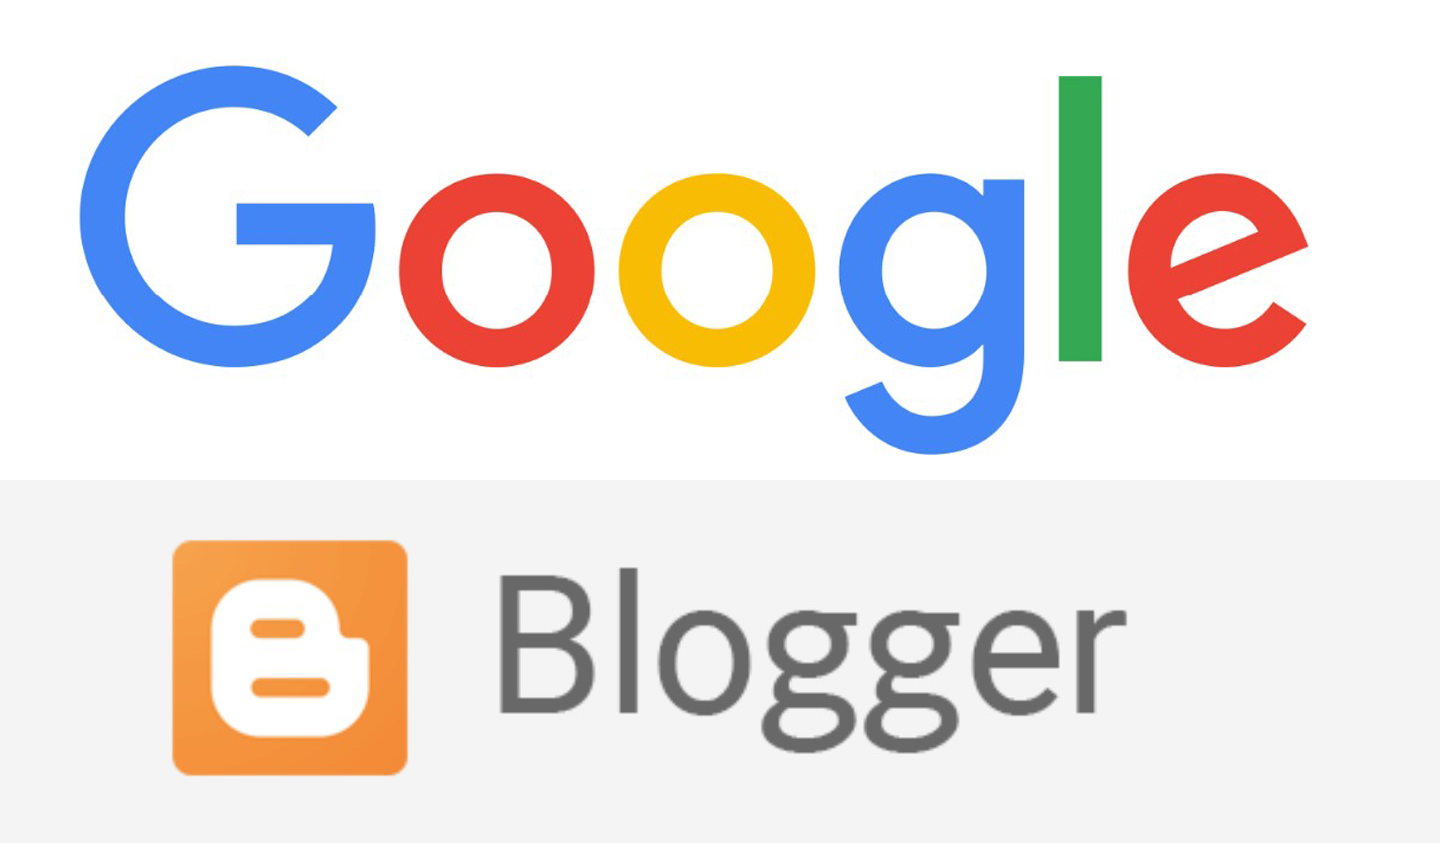 Google Blogger-Benefits of Google Blogger